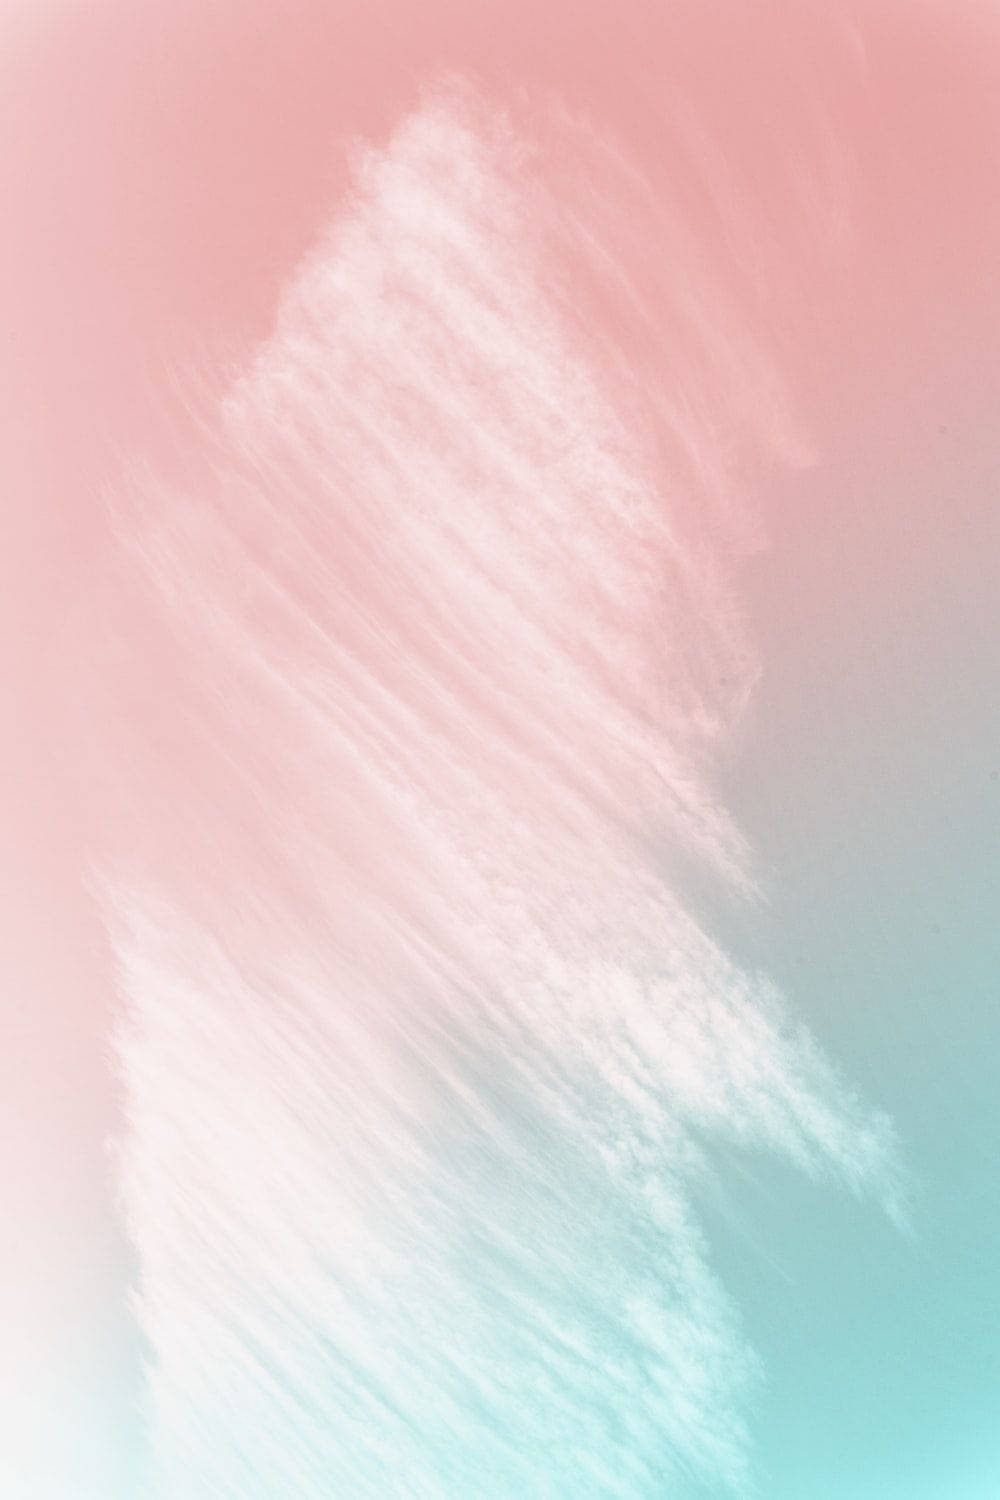 Pastel Ipad Gradient Pink Cyan Wallpaper